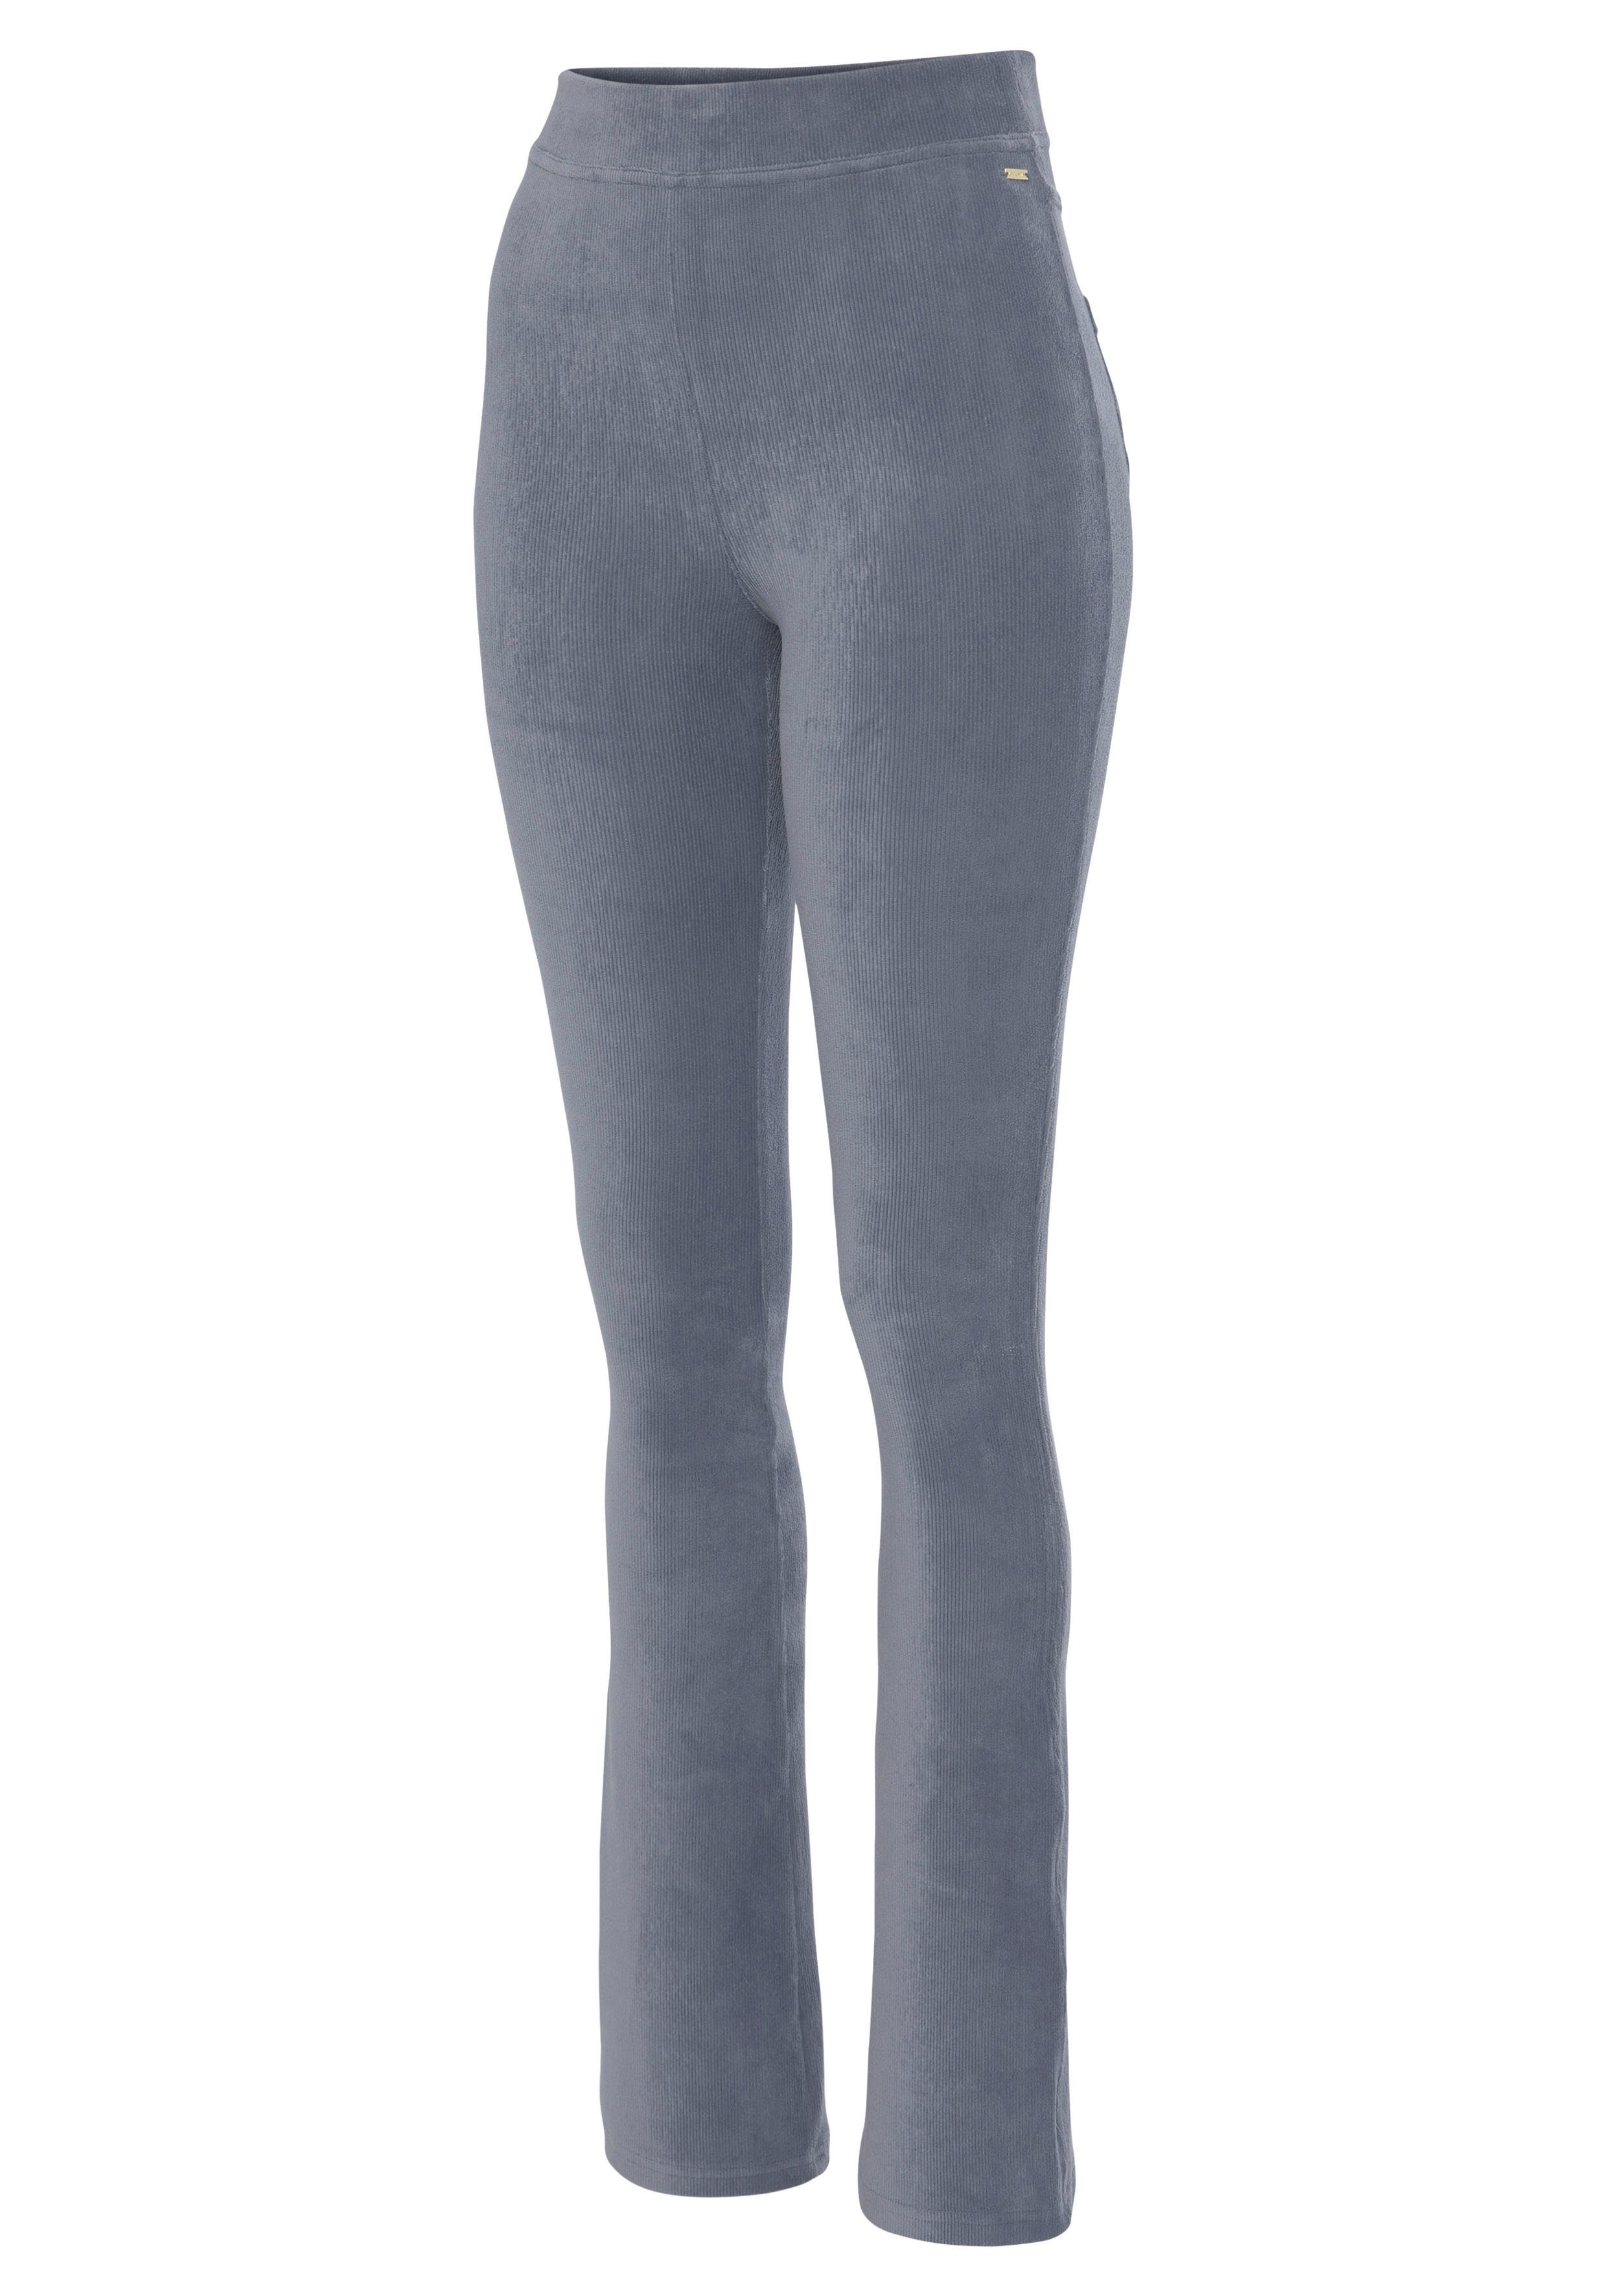 Jazzpants weichem in graublau Material Loungewear LASCANA Cord-Optik, aus